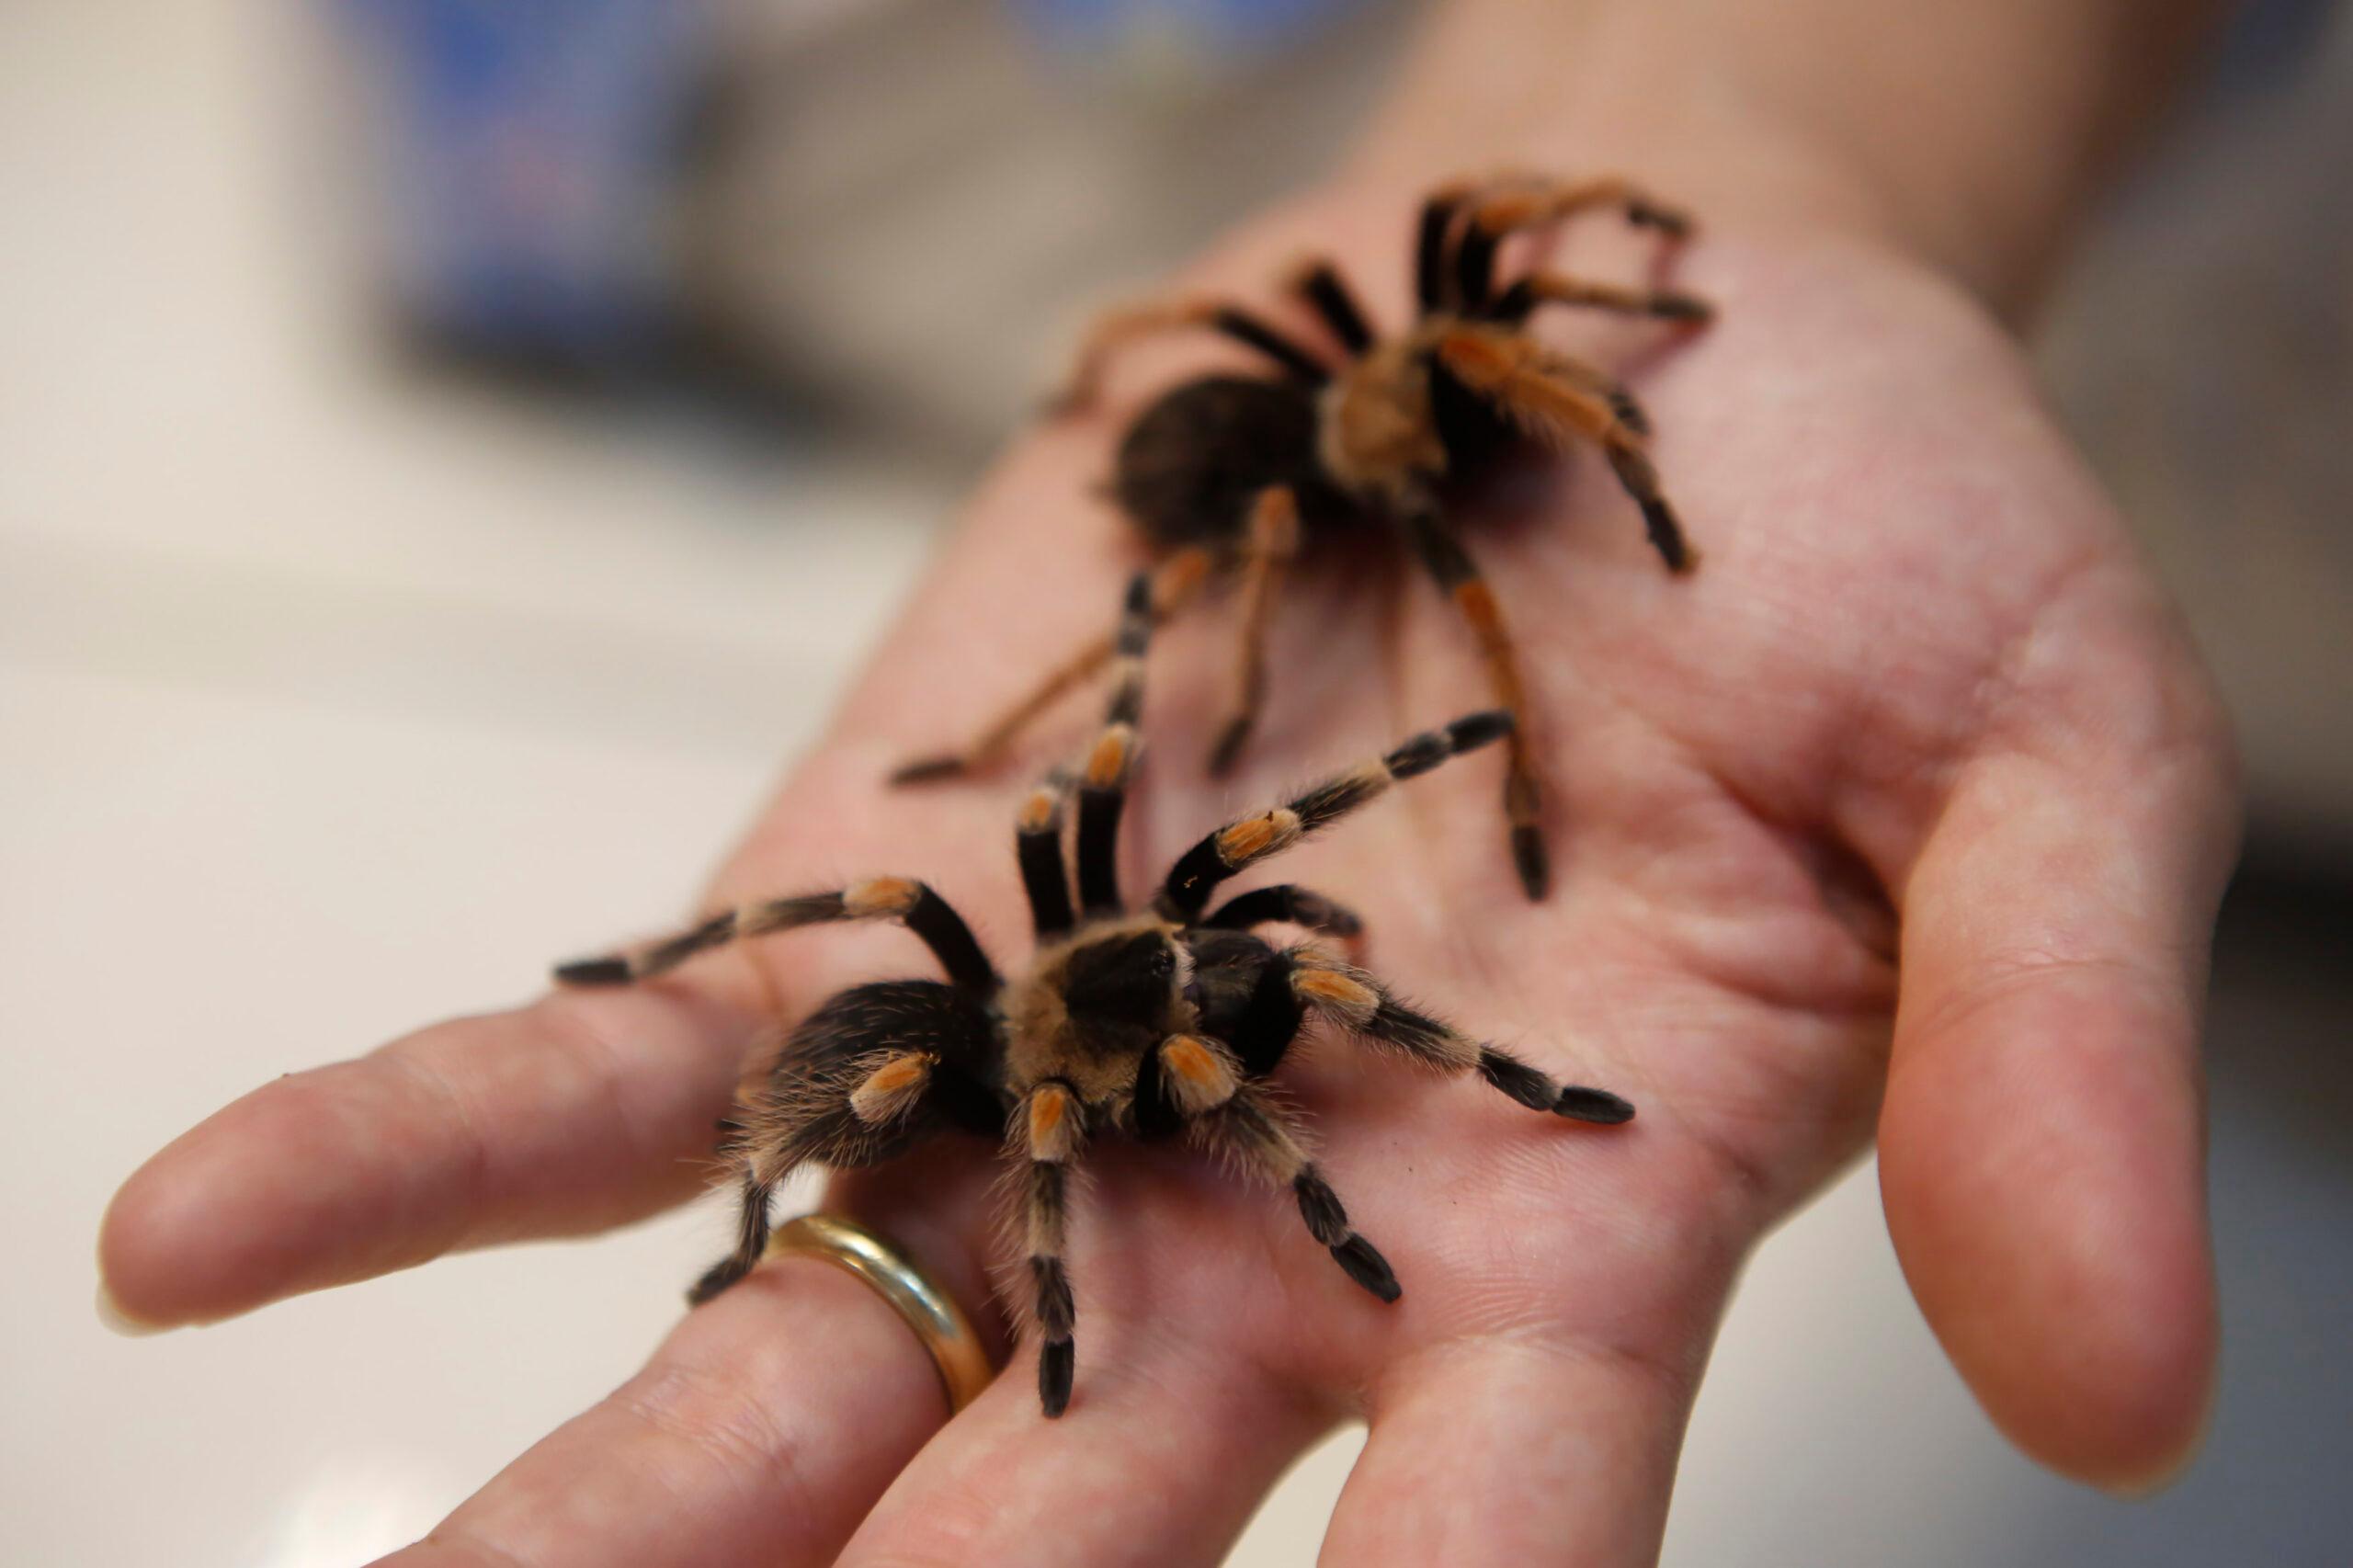 Breeding thousands of tarantulas